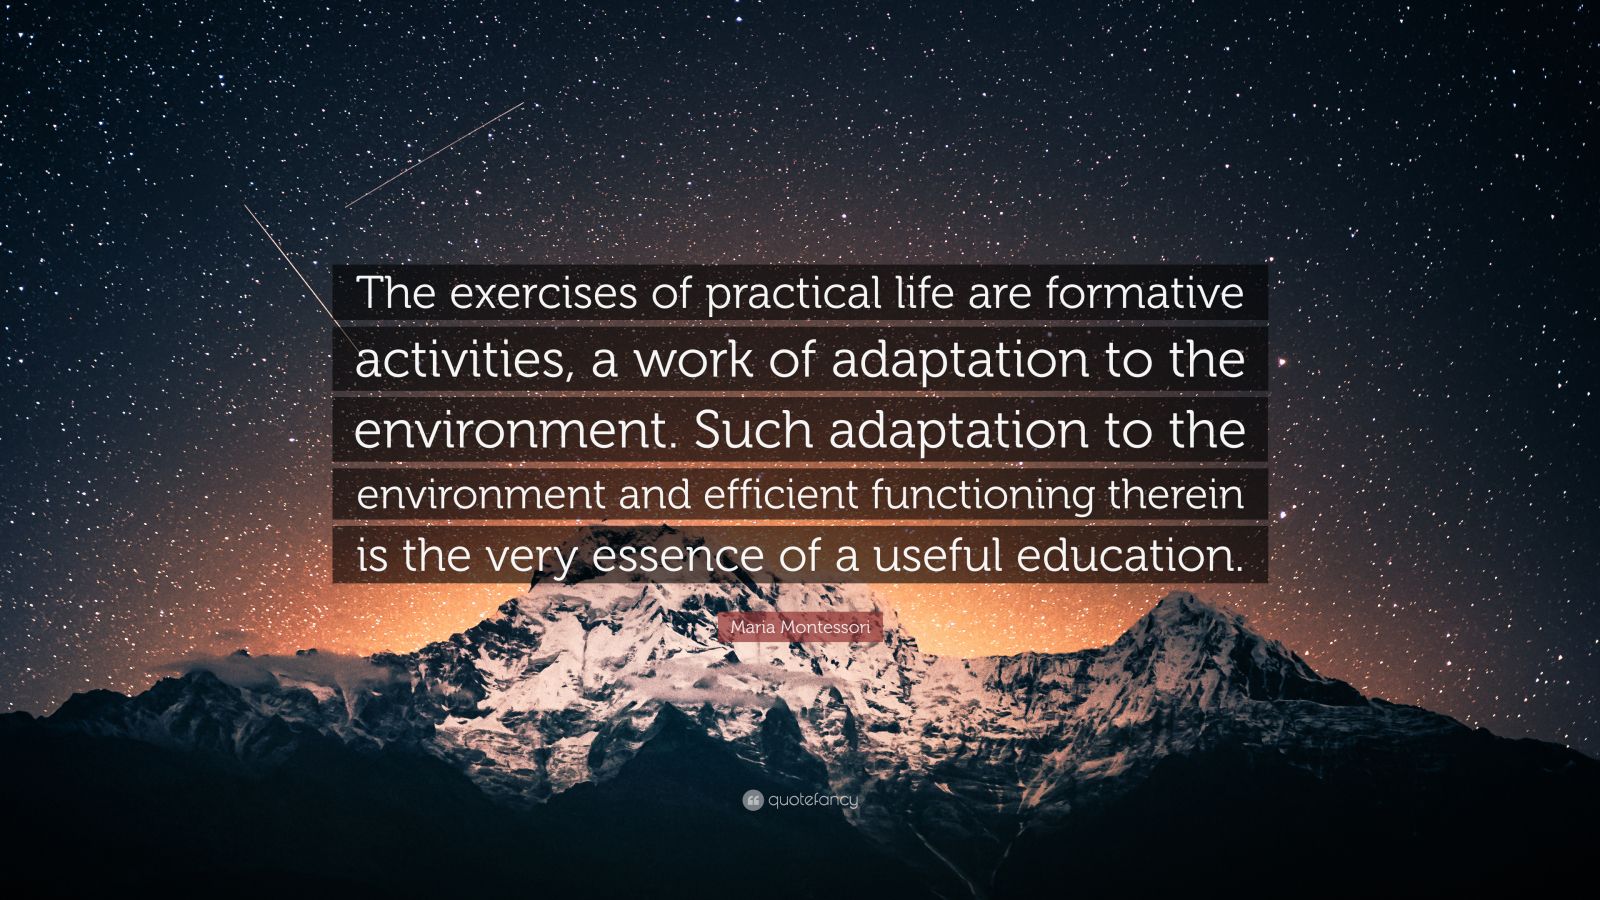 Maria Montessori Quote: "The exercises of practical life ...